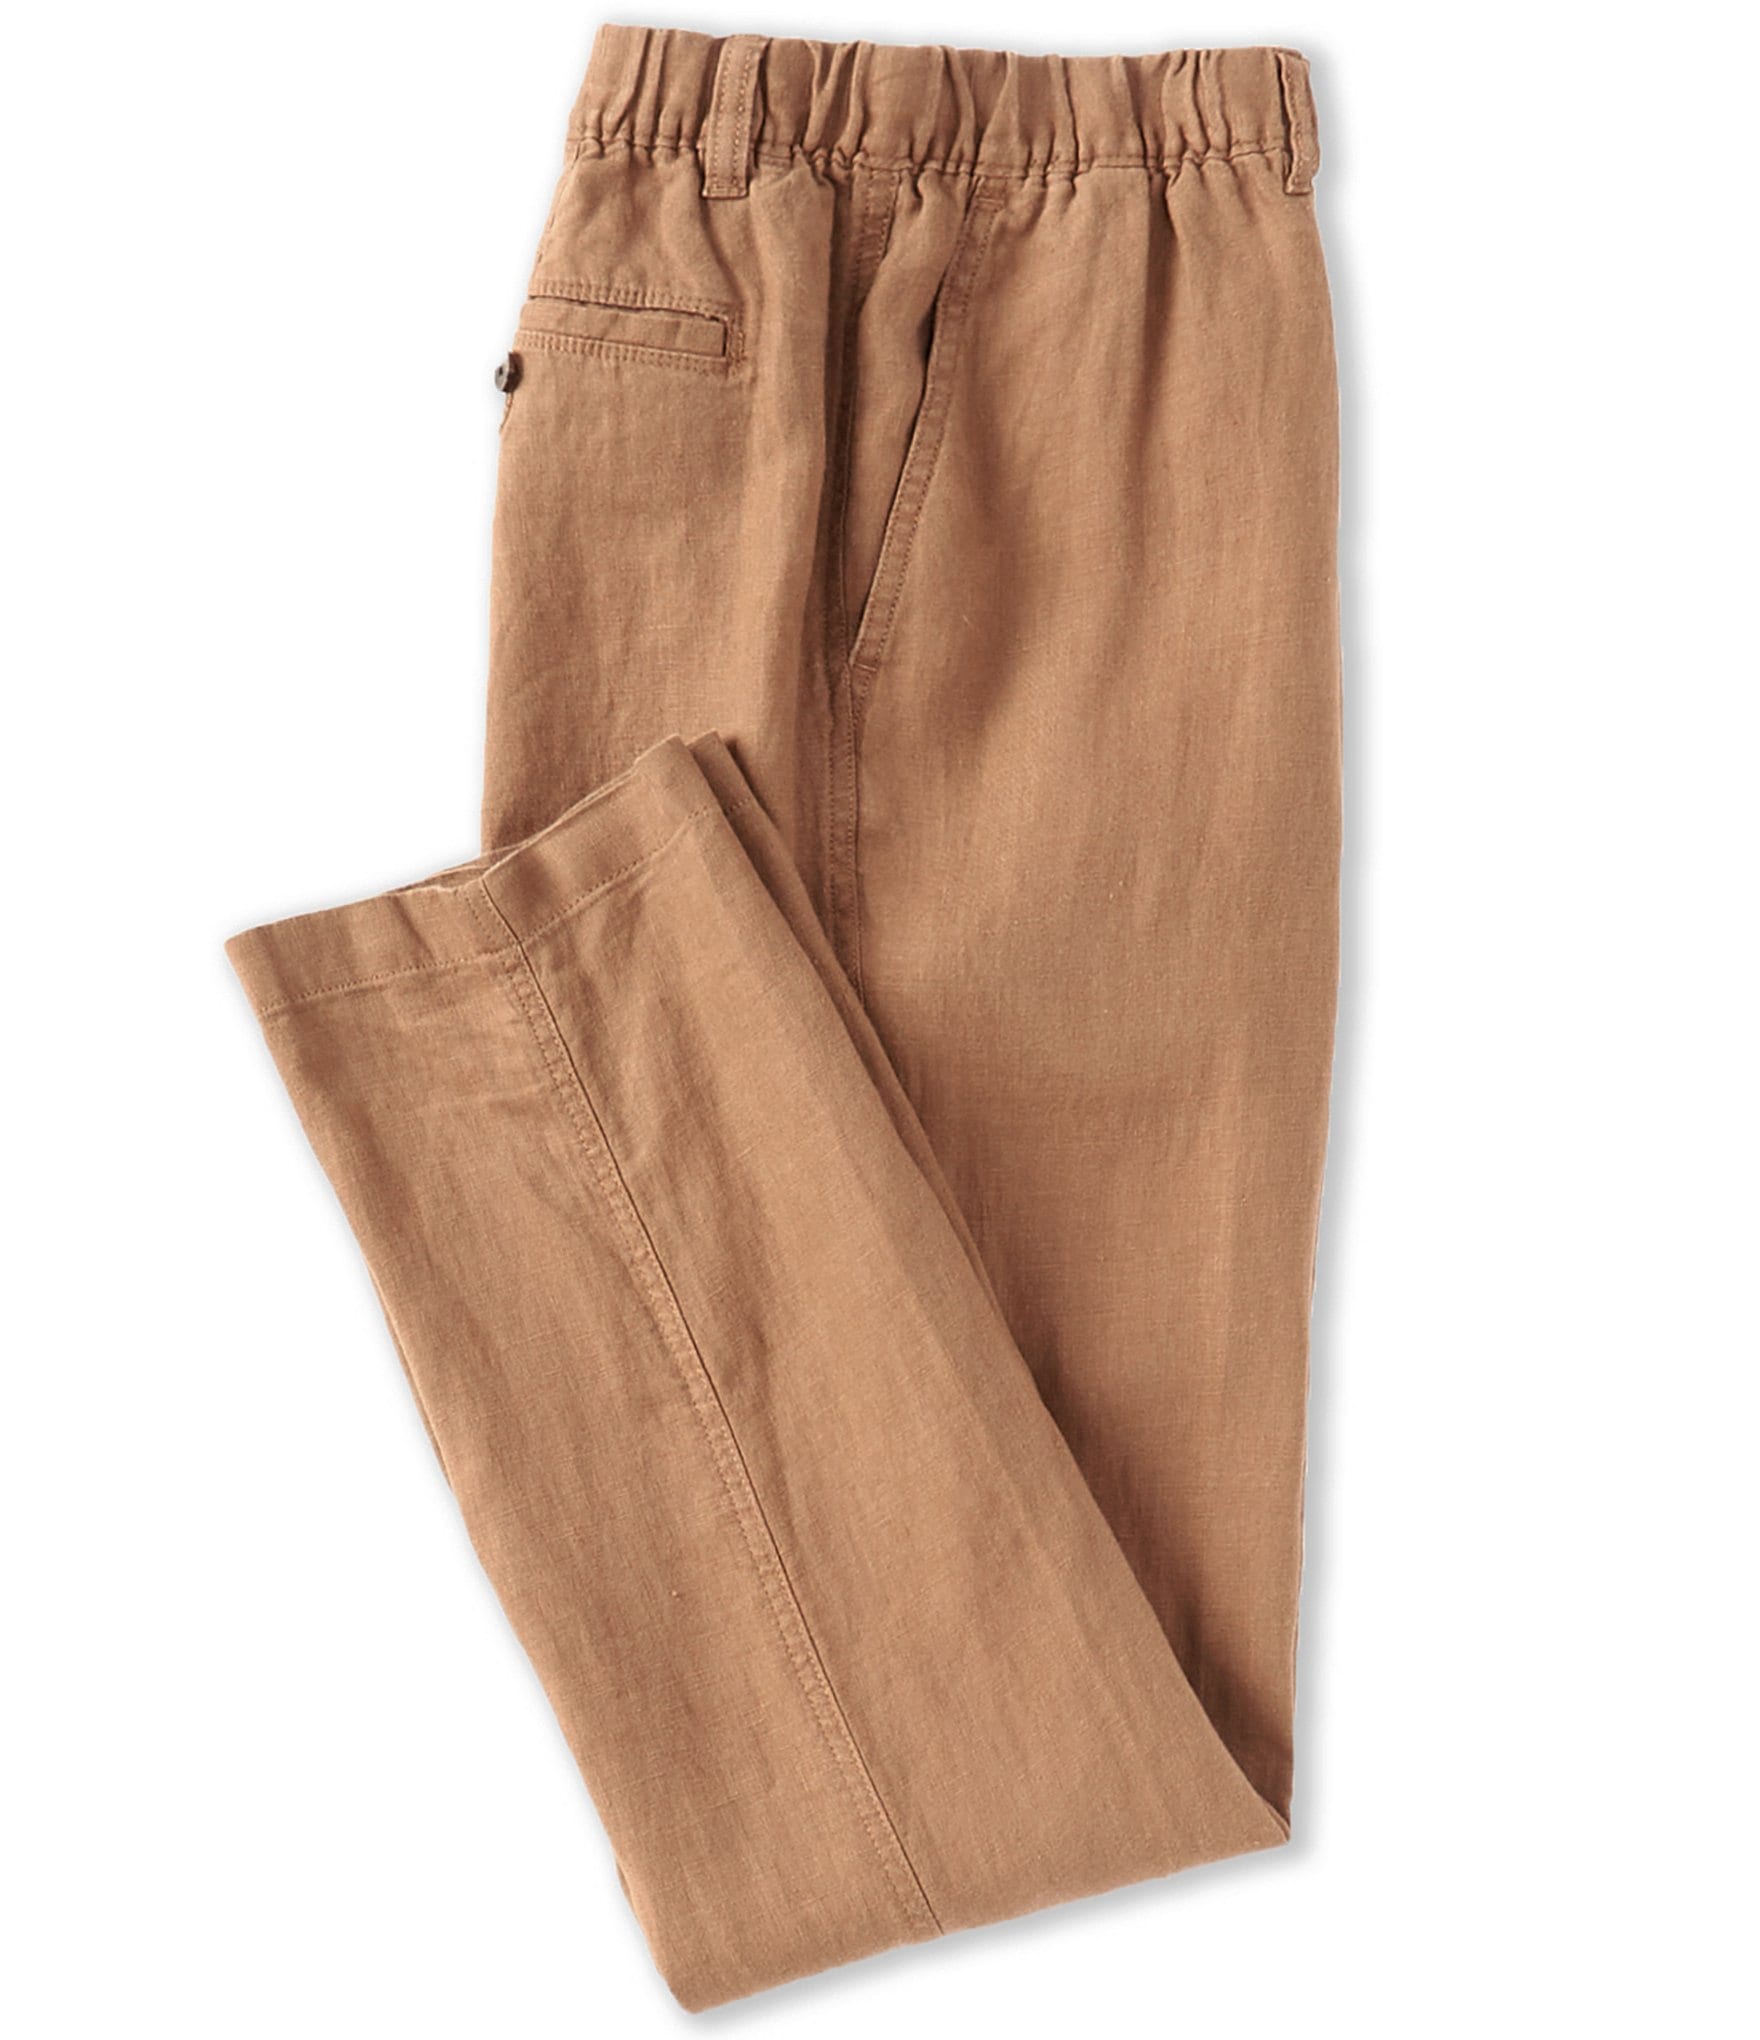 Buy Mens Premium Soft Linen Pants Wrinkle Resistant Flat Front Classic  Slacks Small White at Amazonin